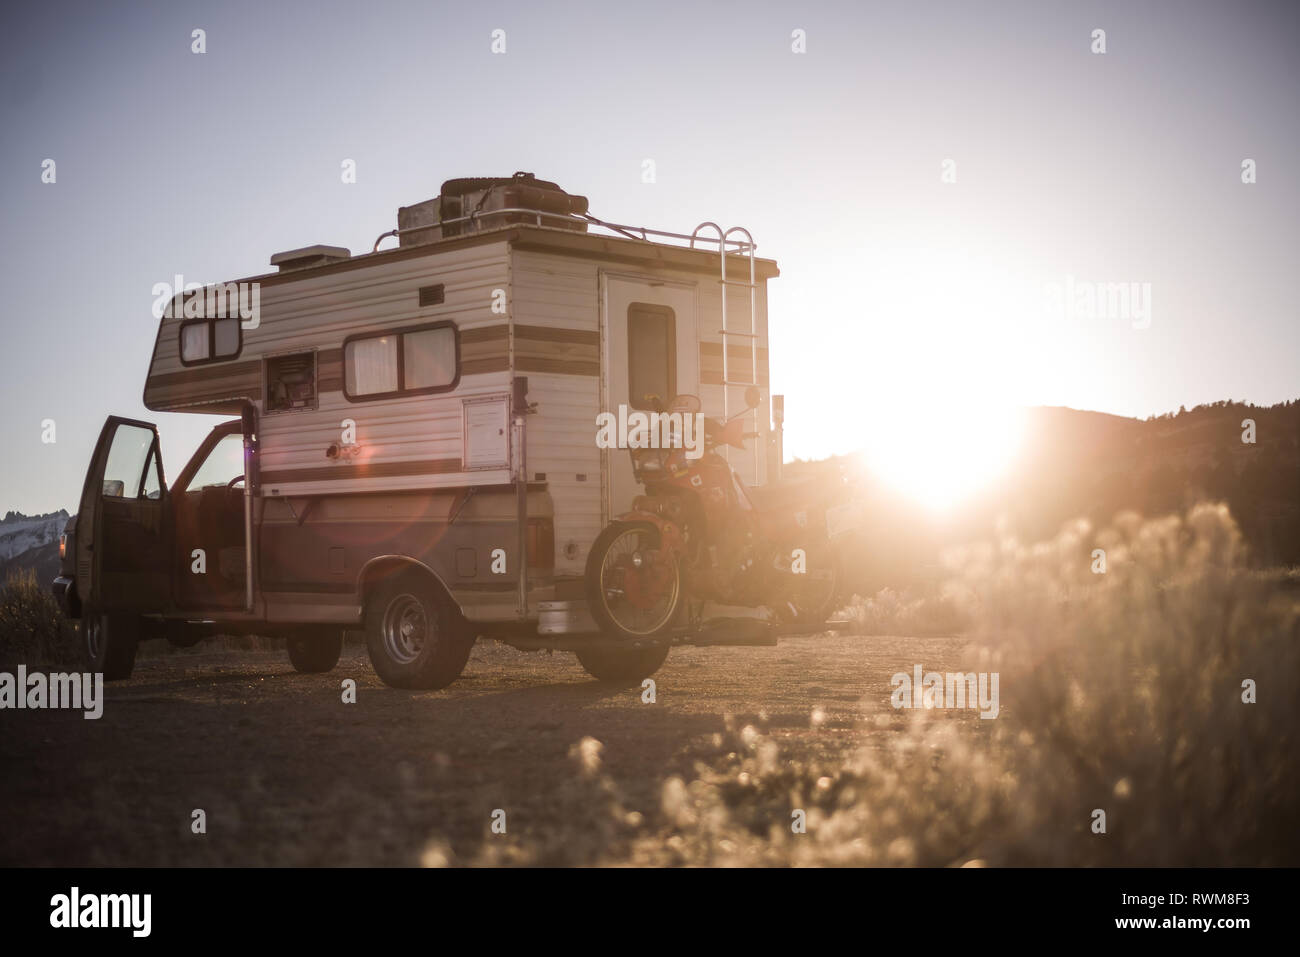 Campervan carrying touring motorcycle behind parked in desert, Sierra Nevada, Bishop, California, USA Stock Photo